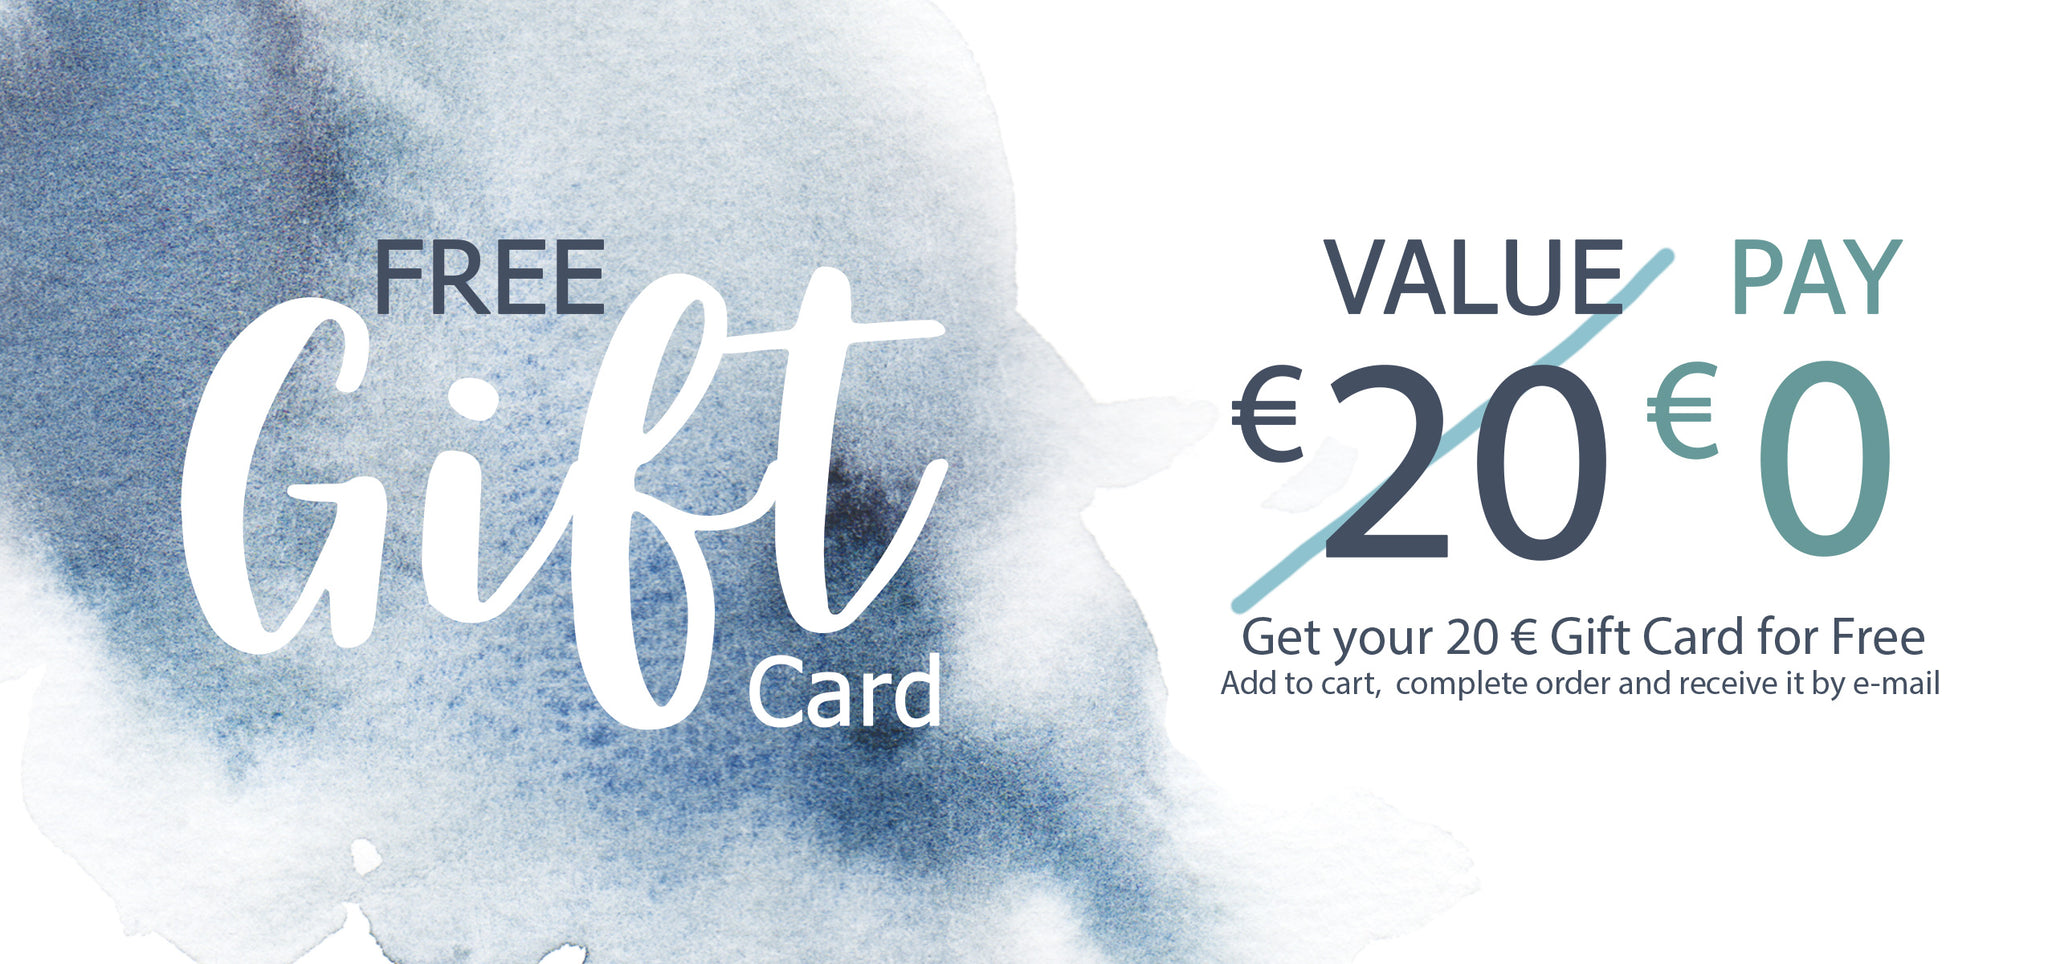 Free Gift Card - 20 Euro Value